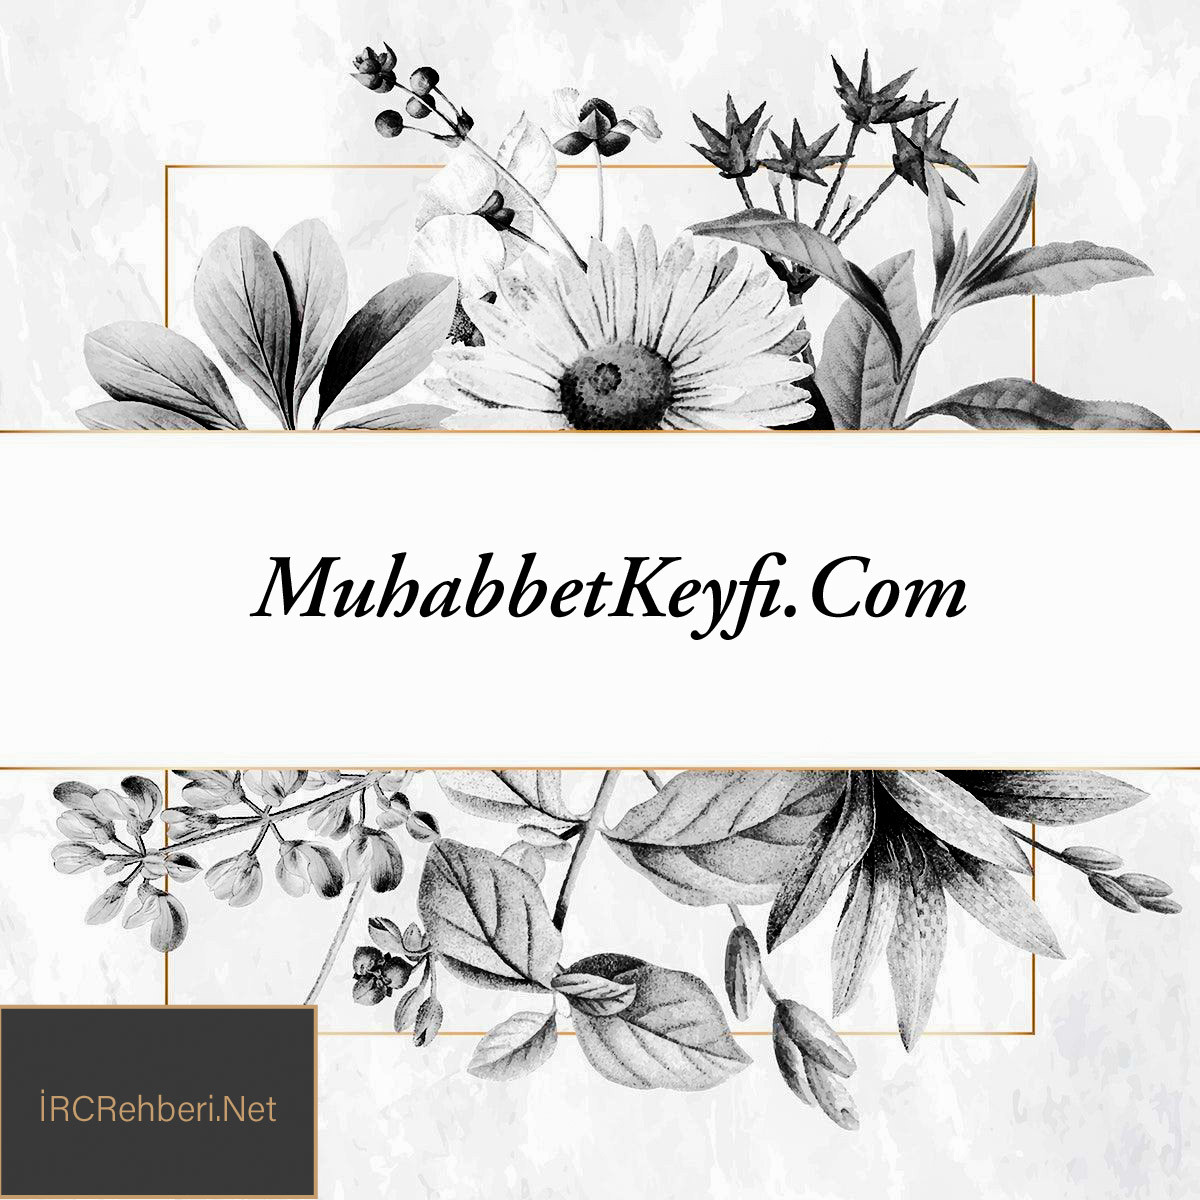 MuhabbetKeyfi.Com